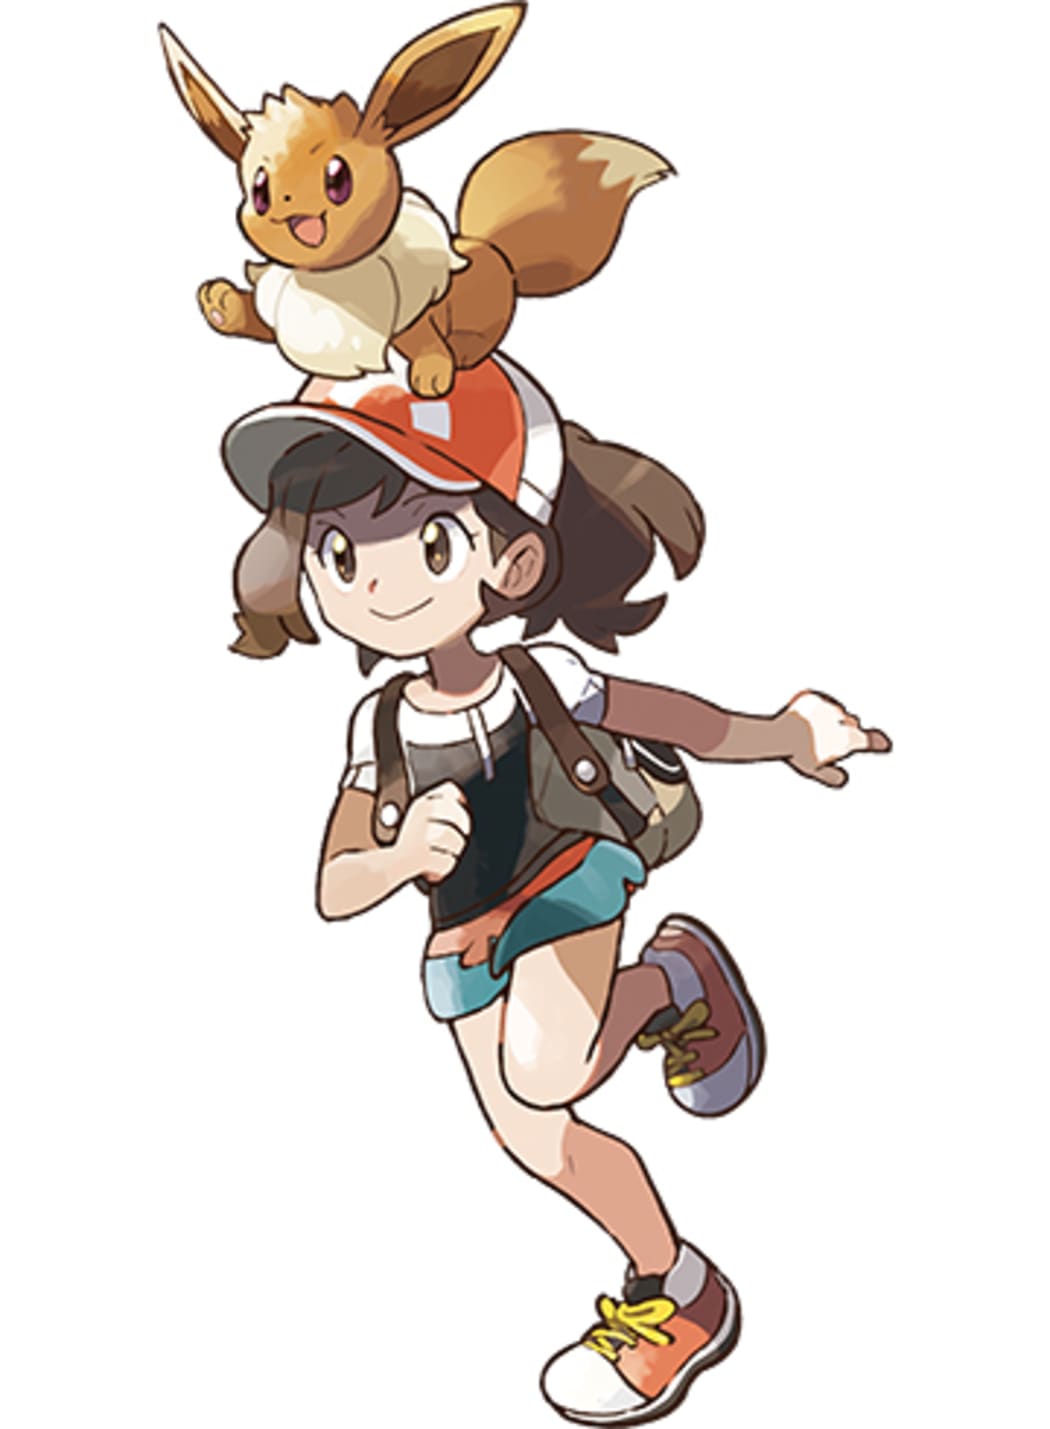 Pokémon™: Let's Go, Eevee! for Nintendo Switch - Nintendo Official 